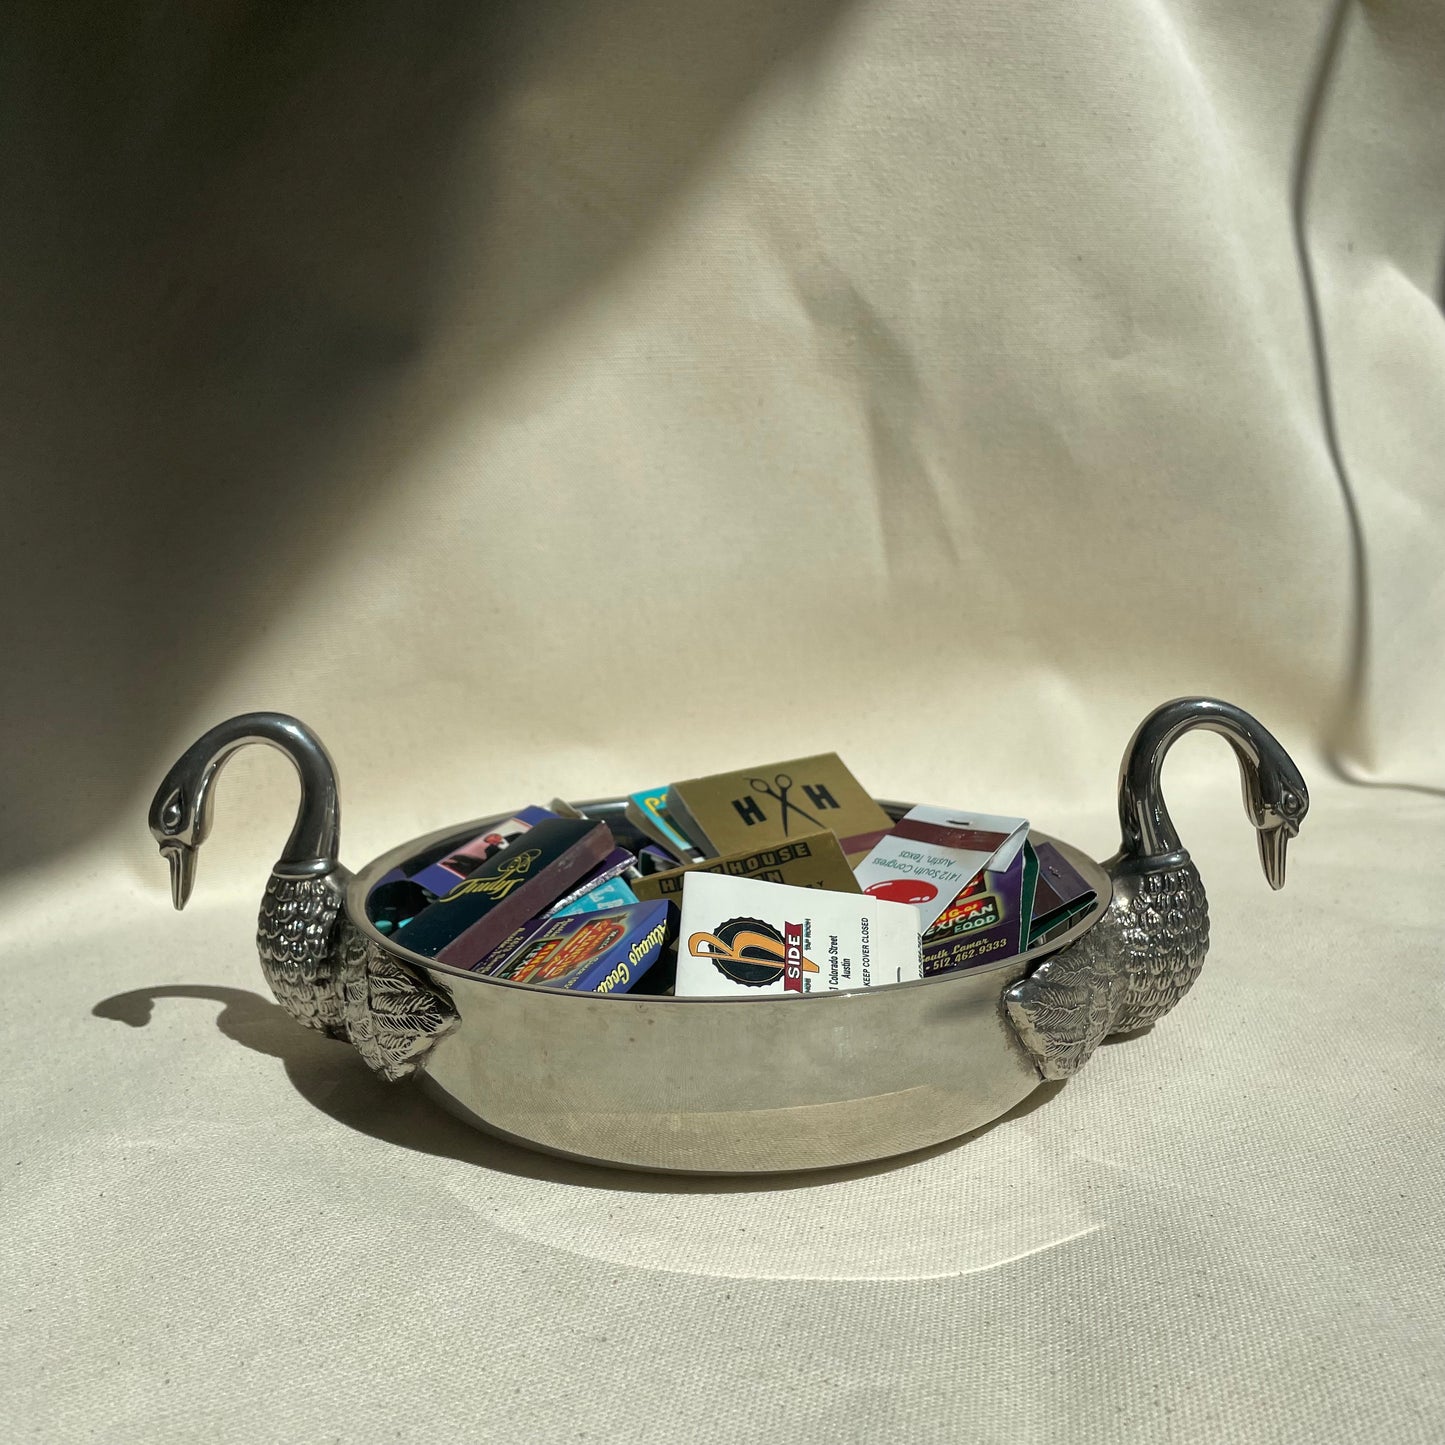 Vintage Silver-Plated Dual Swan Bowl